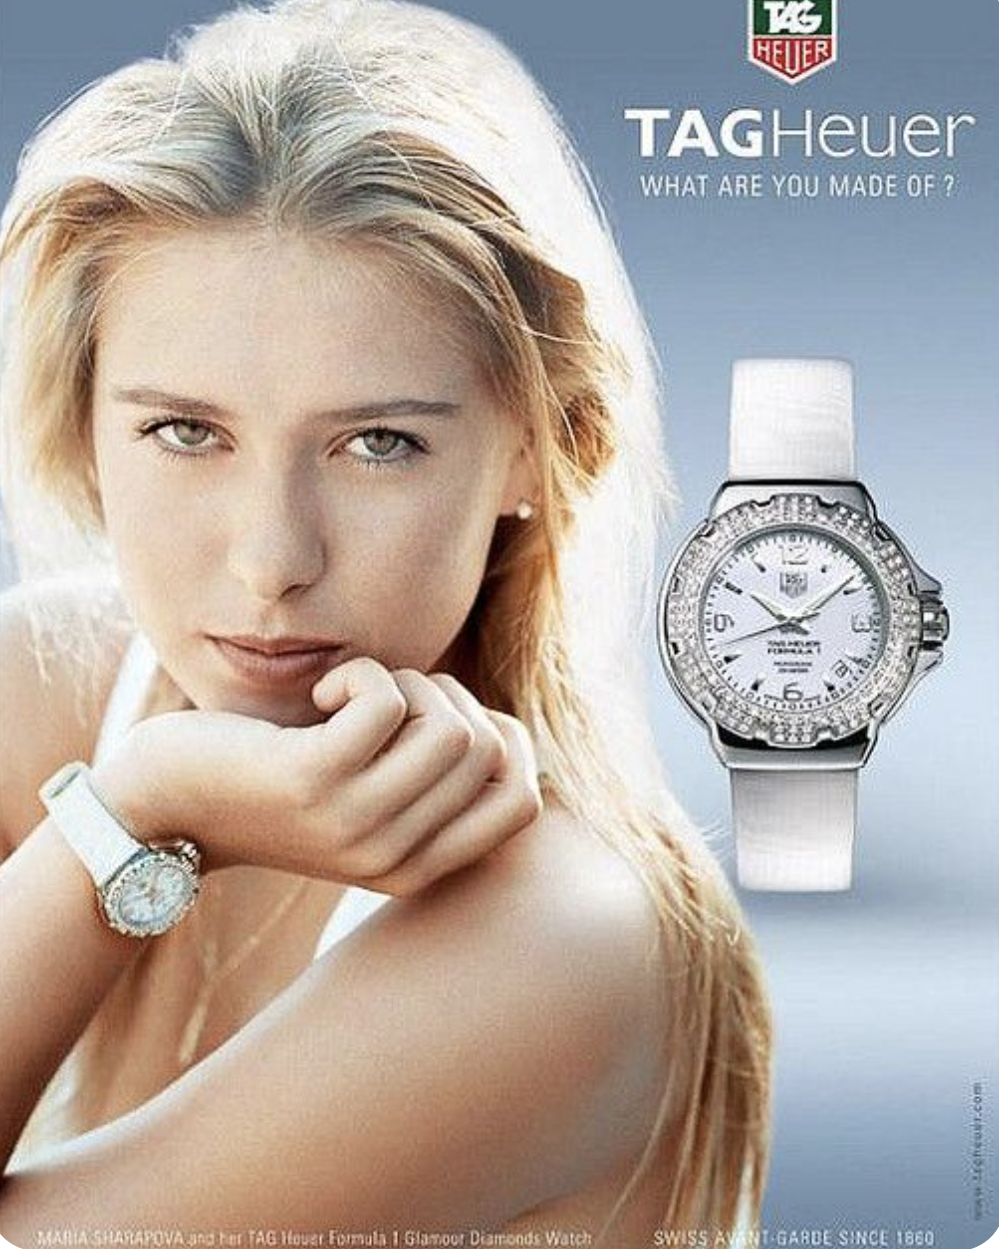 Swiss watch brand Tag Heuer made Sharapova a global ambassador